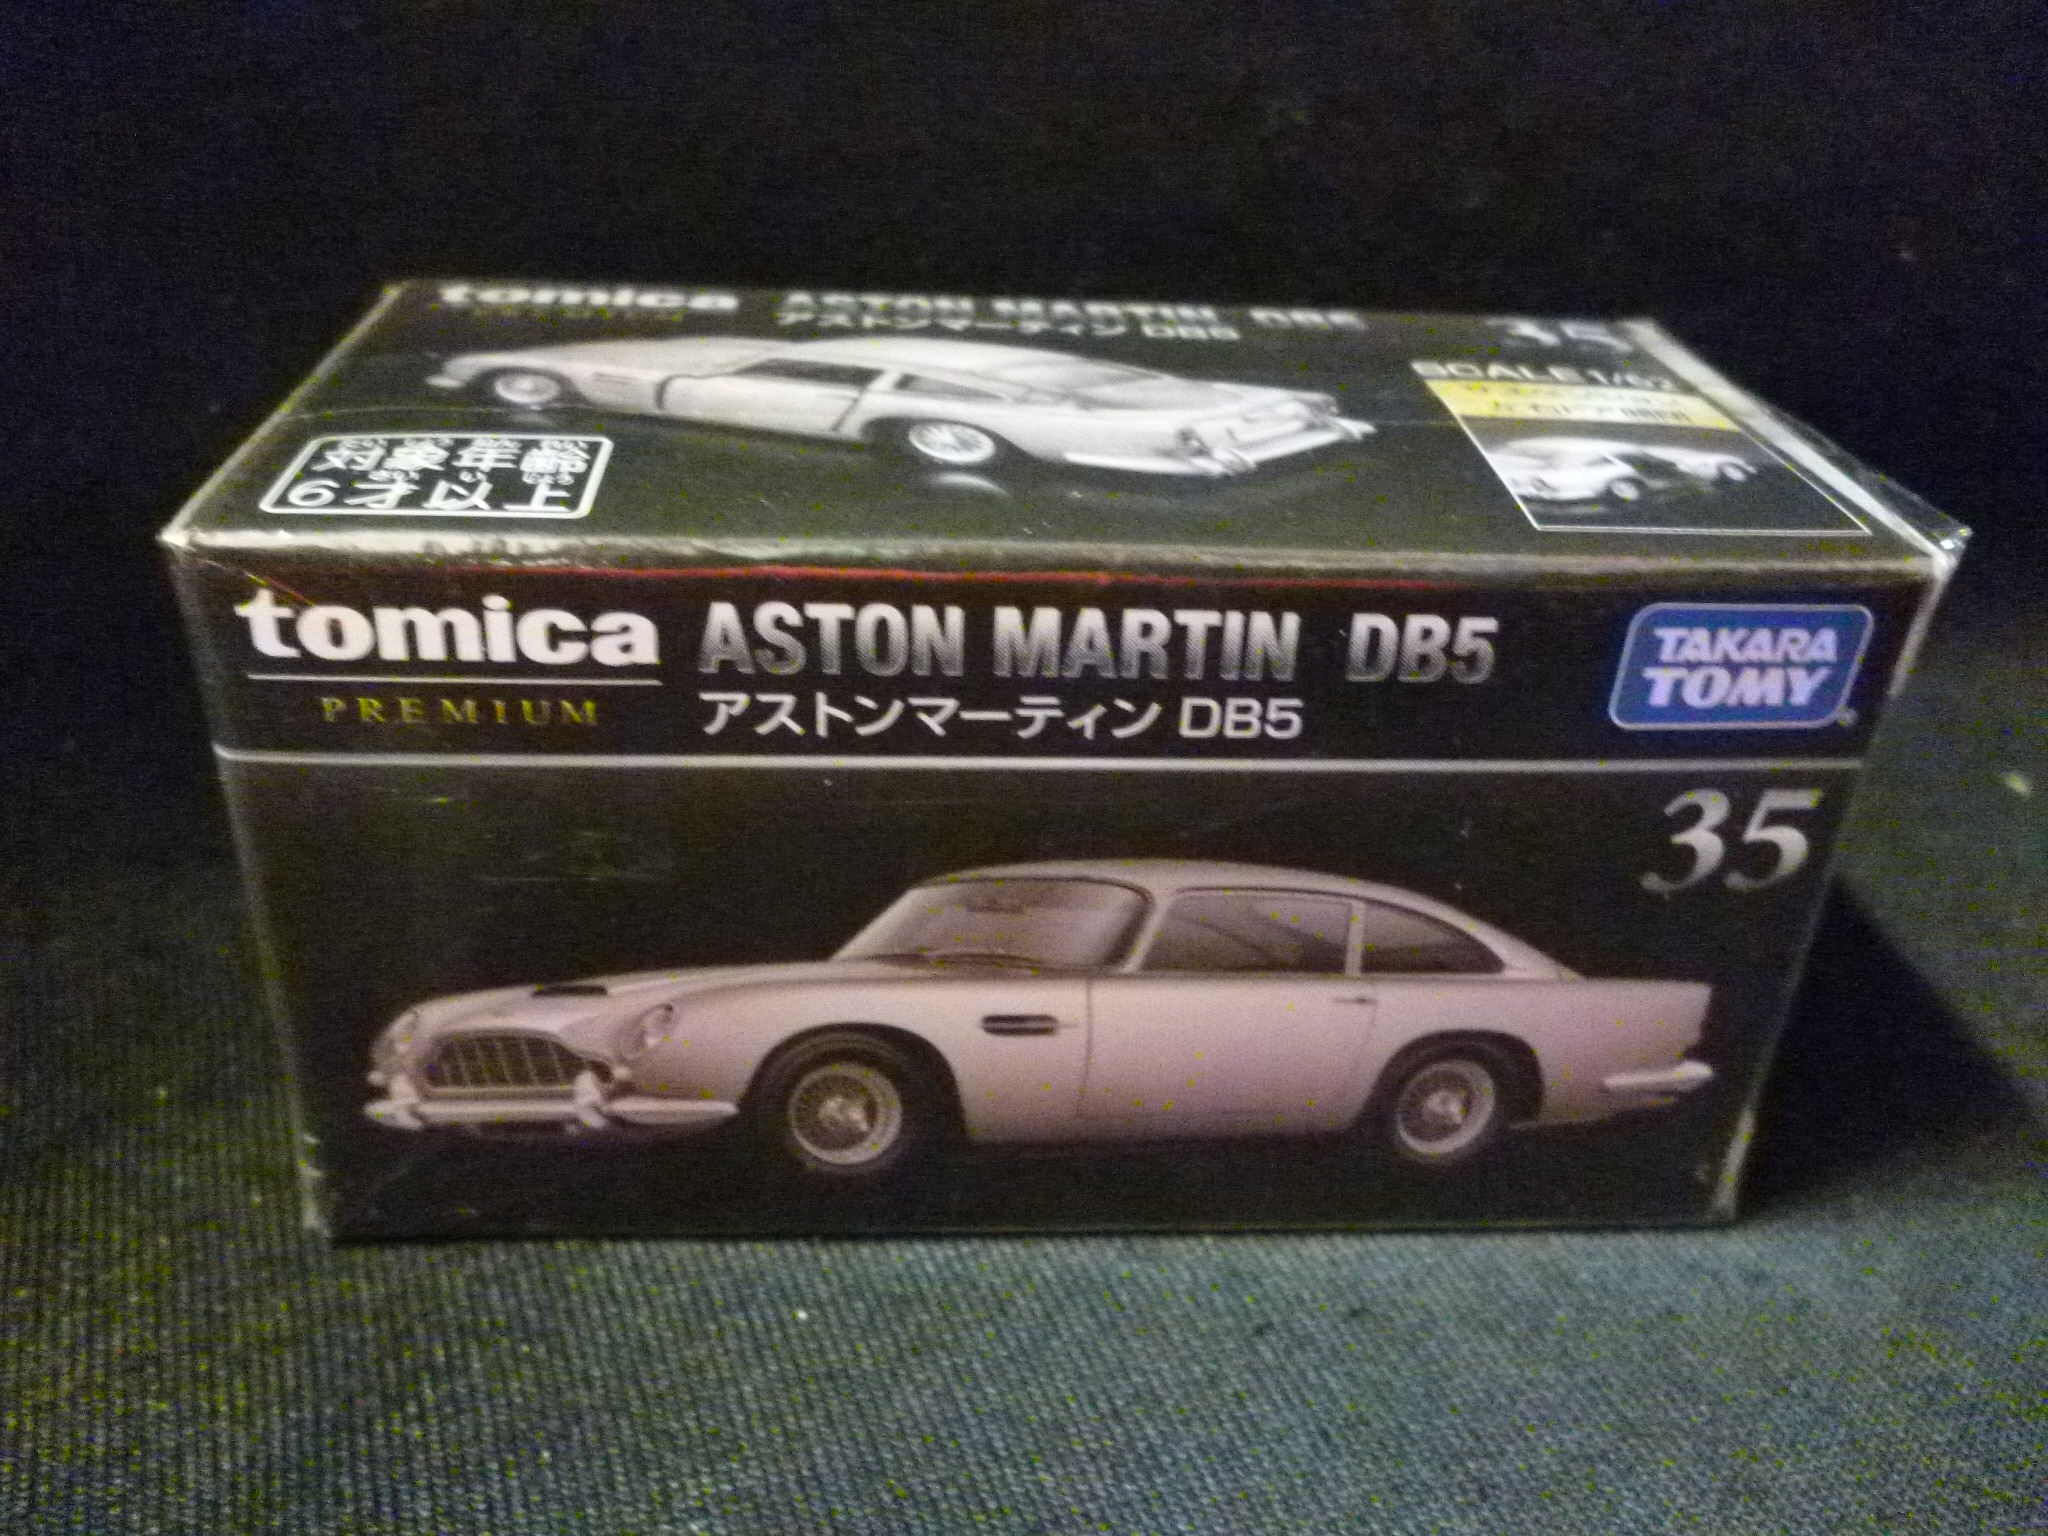 Takara Tomy Tomica Premium No.35 Aston Martin DB5 